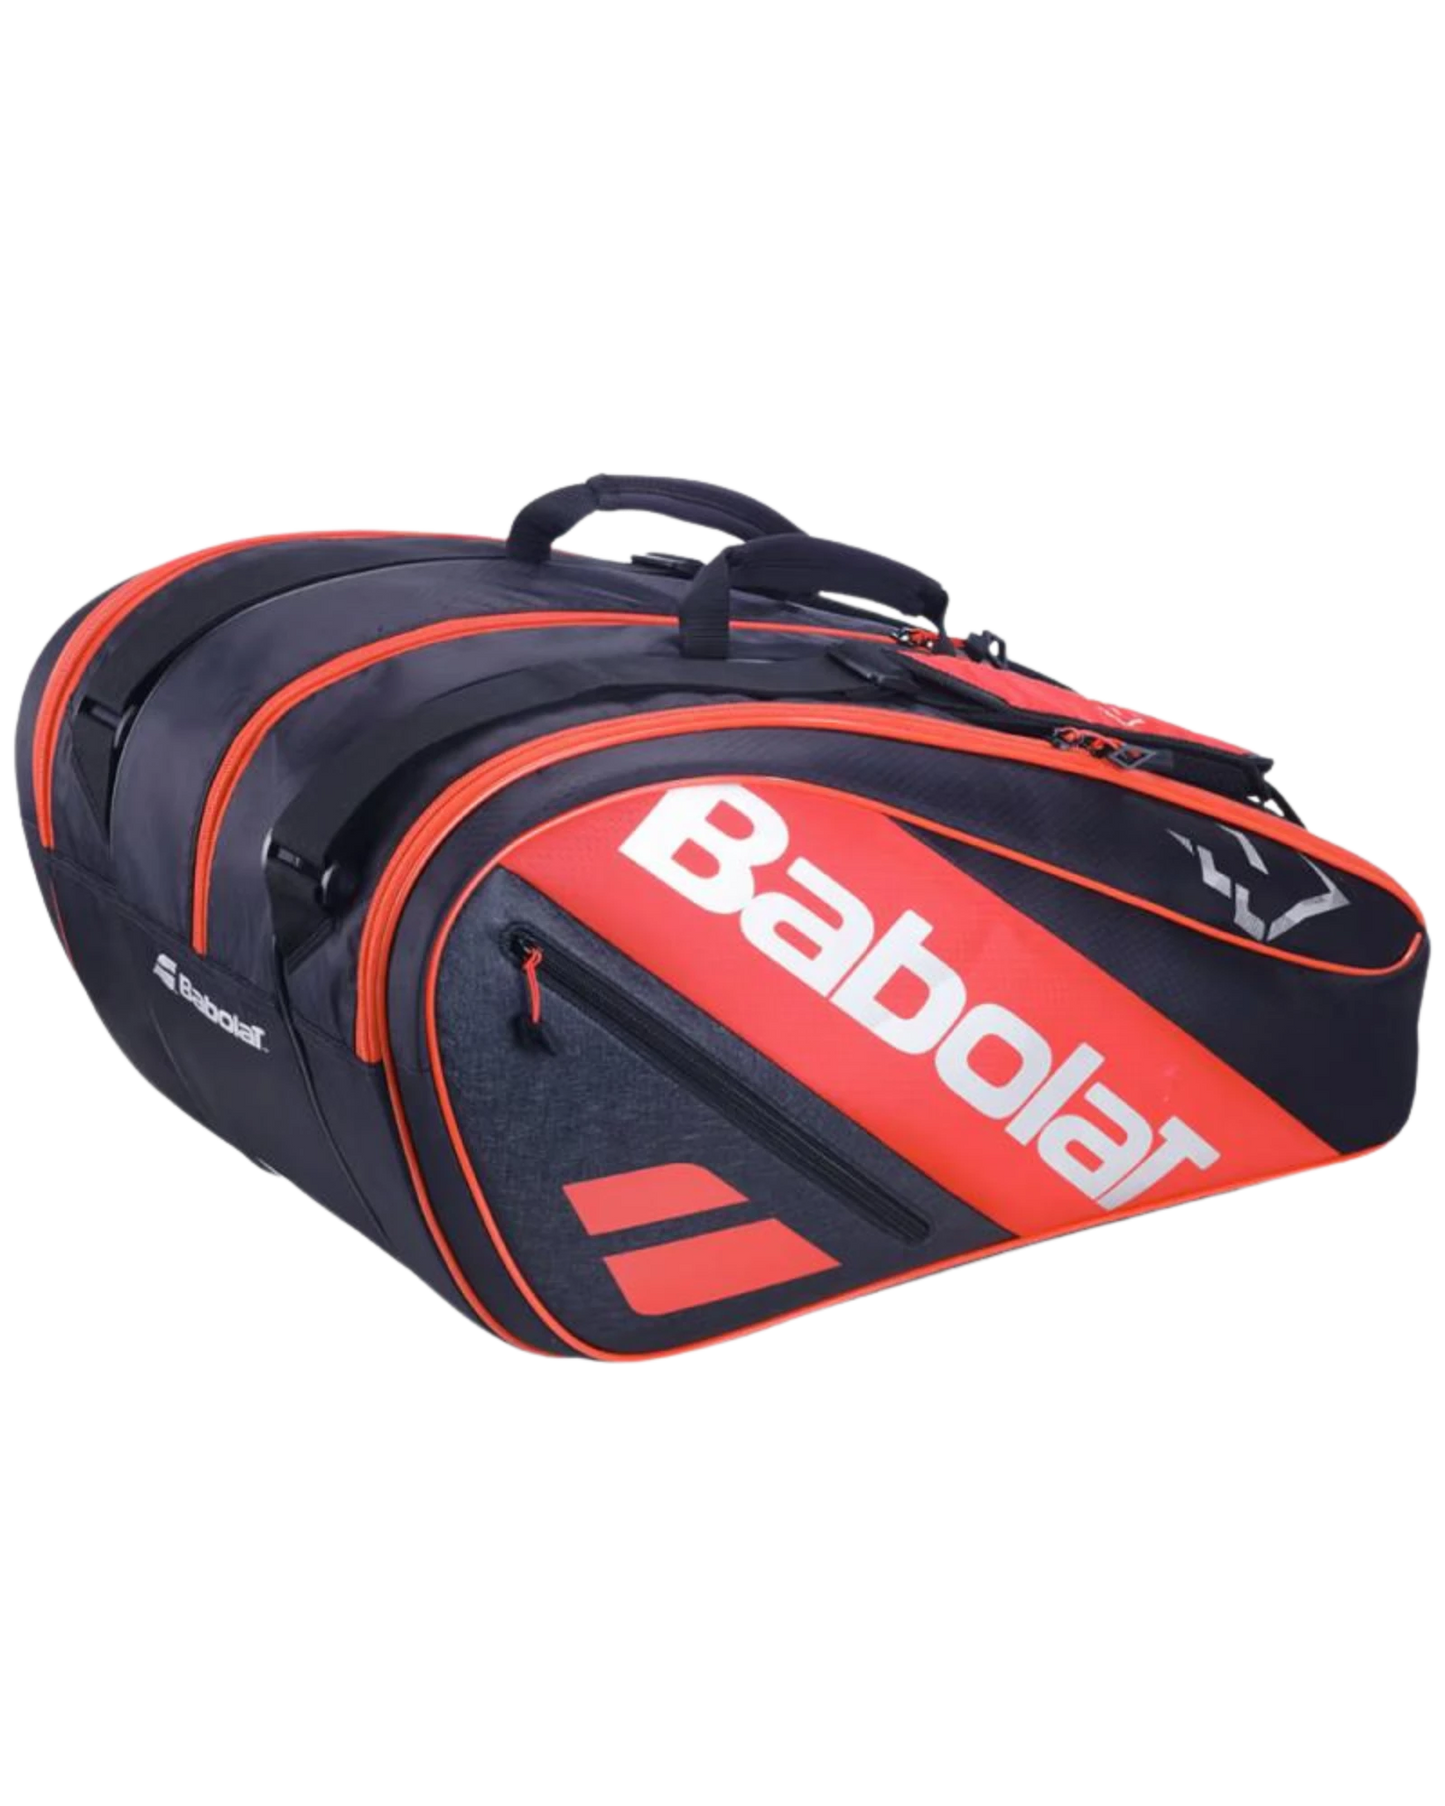 The Babolat  RH Juan Lebron Padel Bag